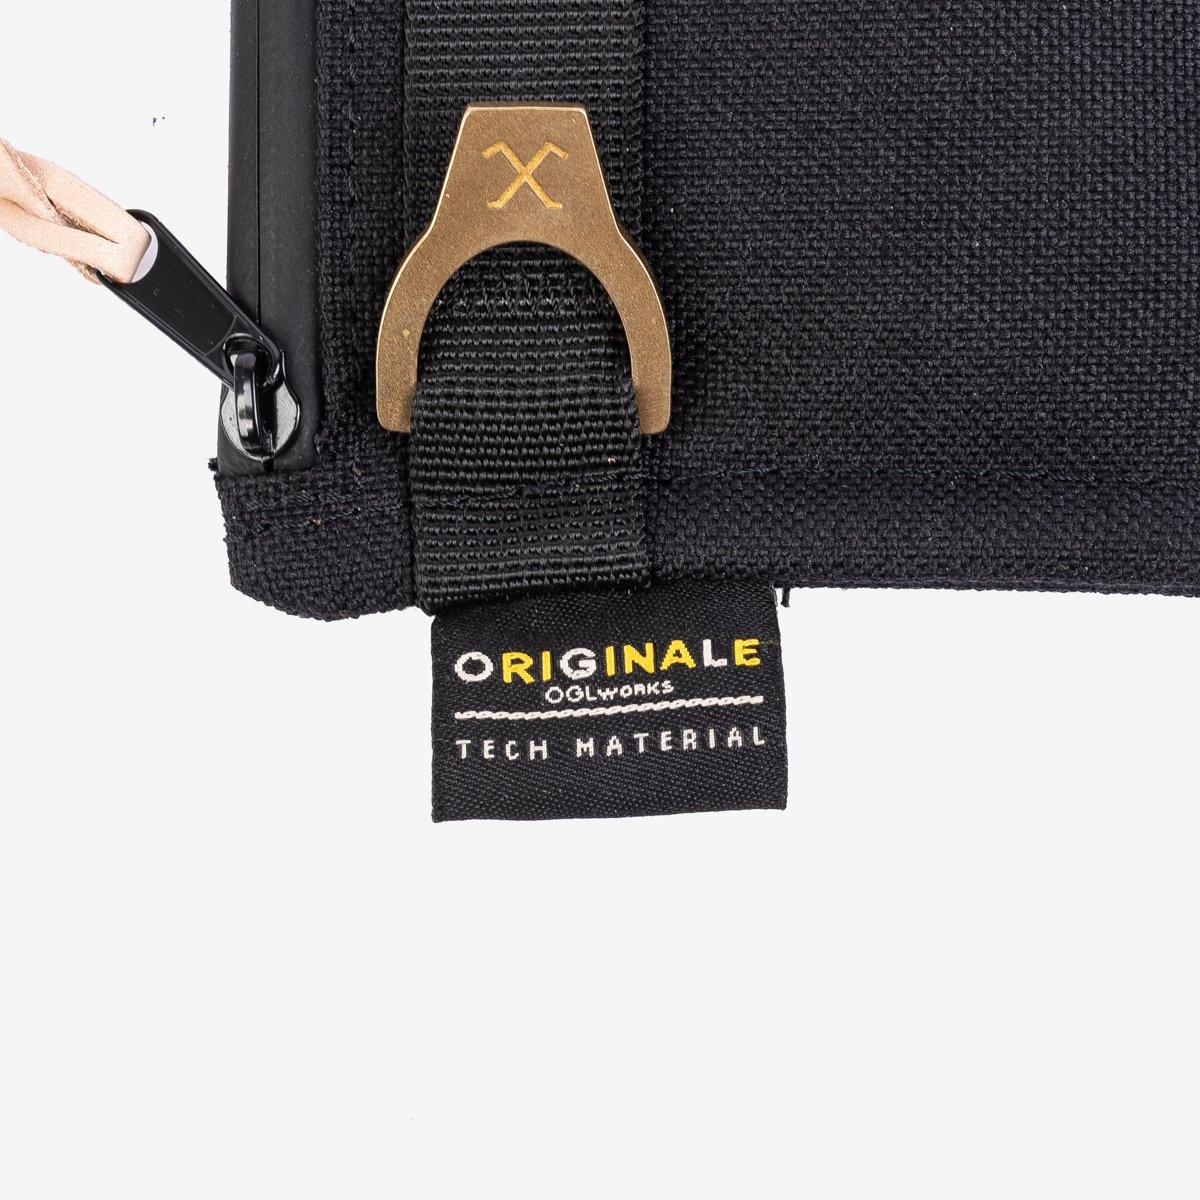 OGL-ORI-MID OGL Originale Tech Material Outdoor Mid Wallet - Black - 4